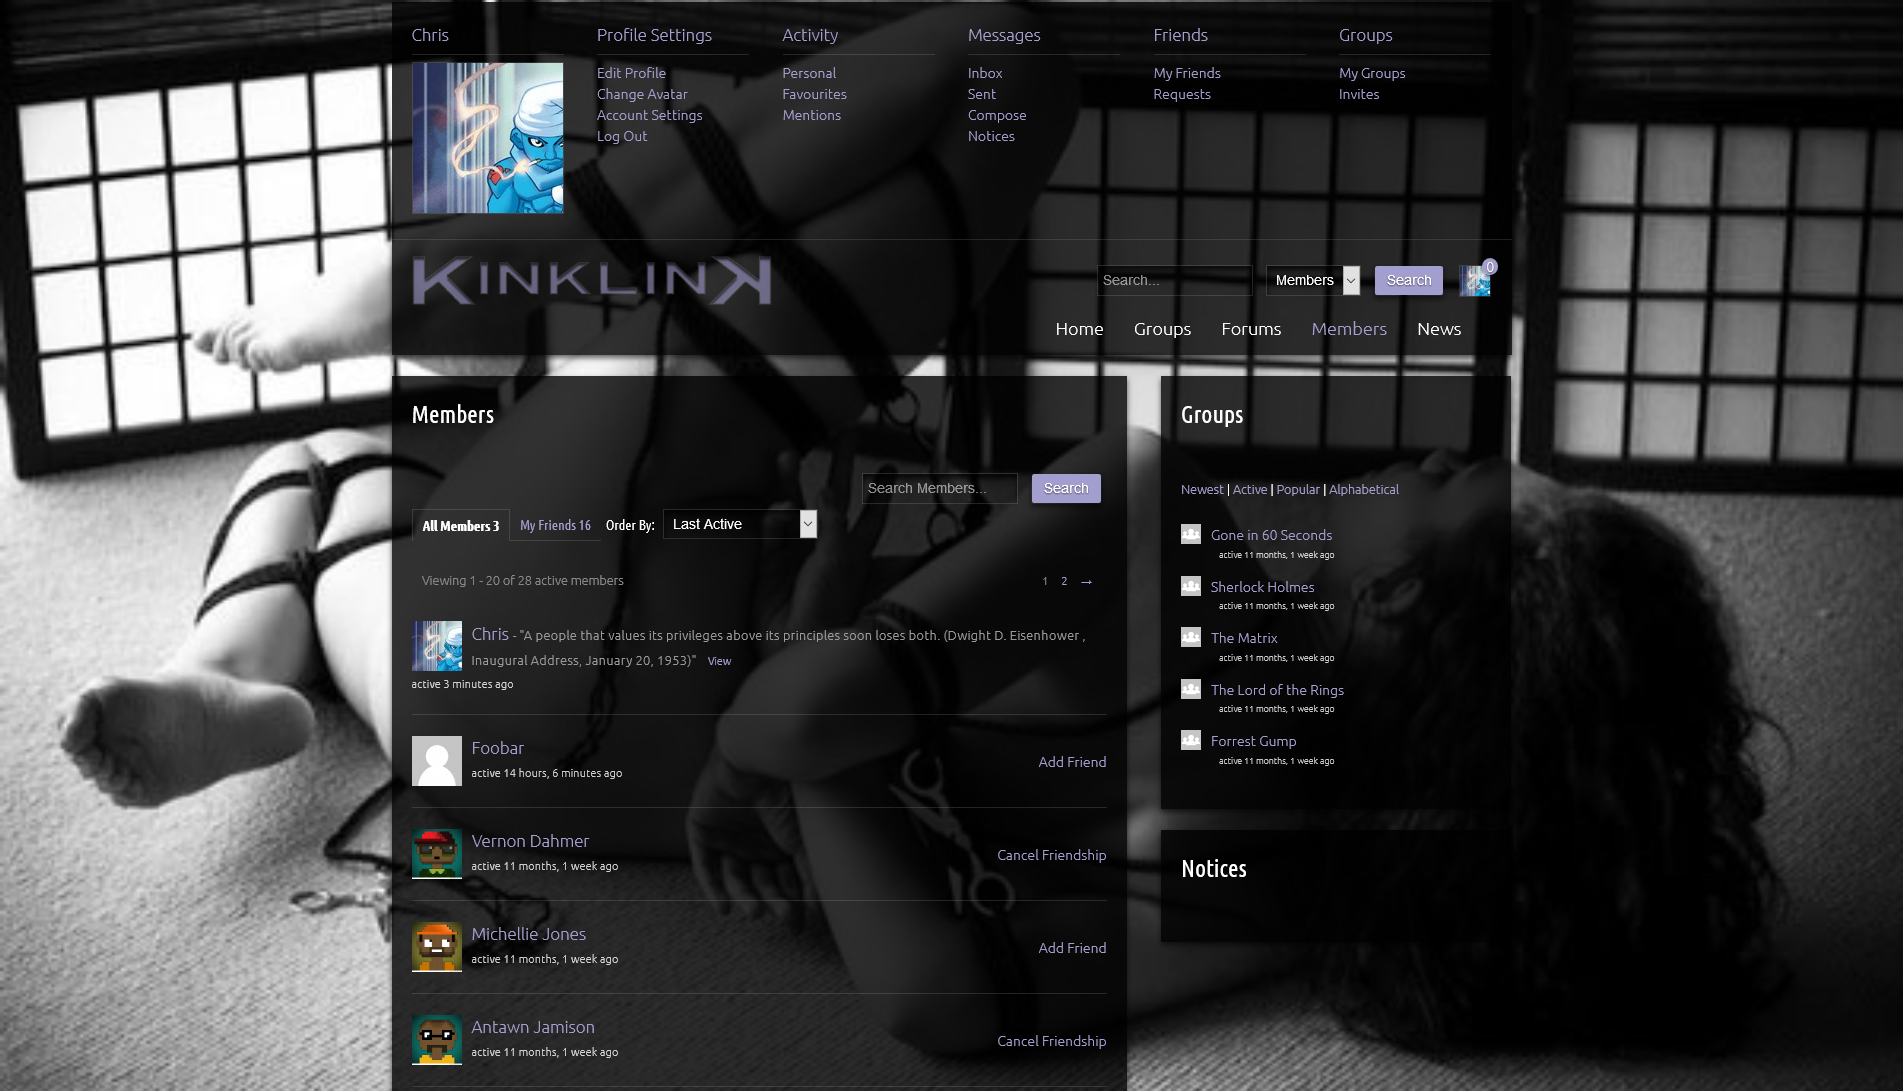 The main menu on desktop